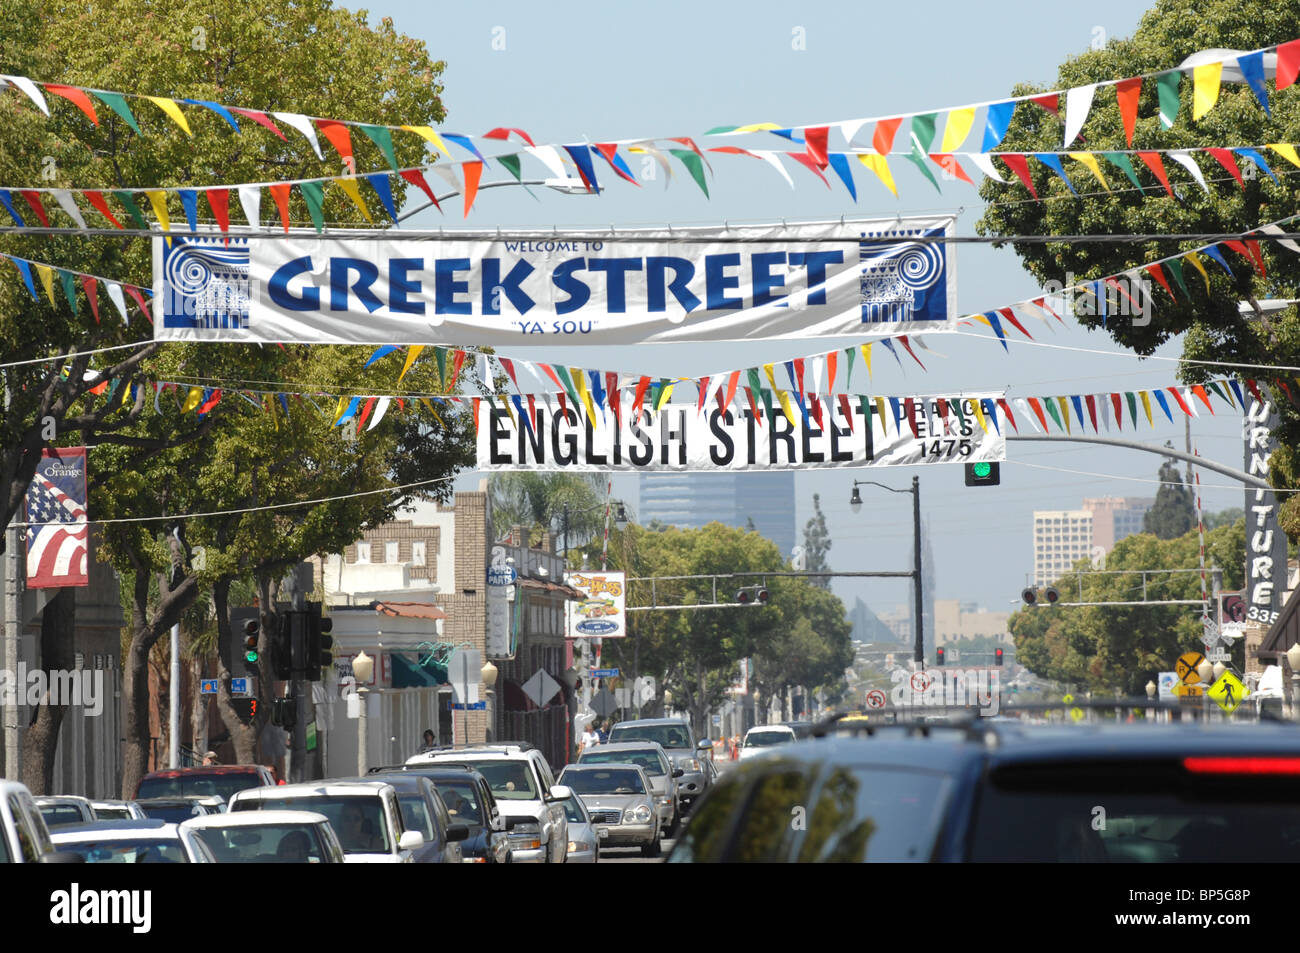 Greek Street and English Street Stock Photo